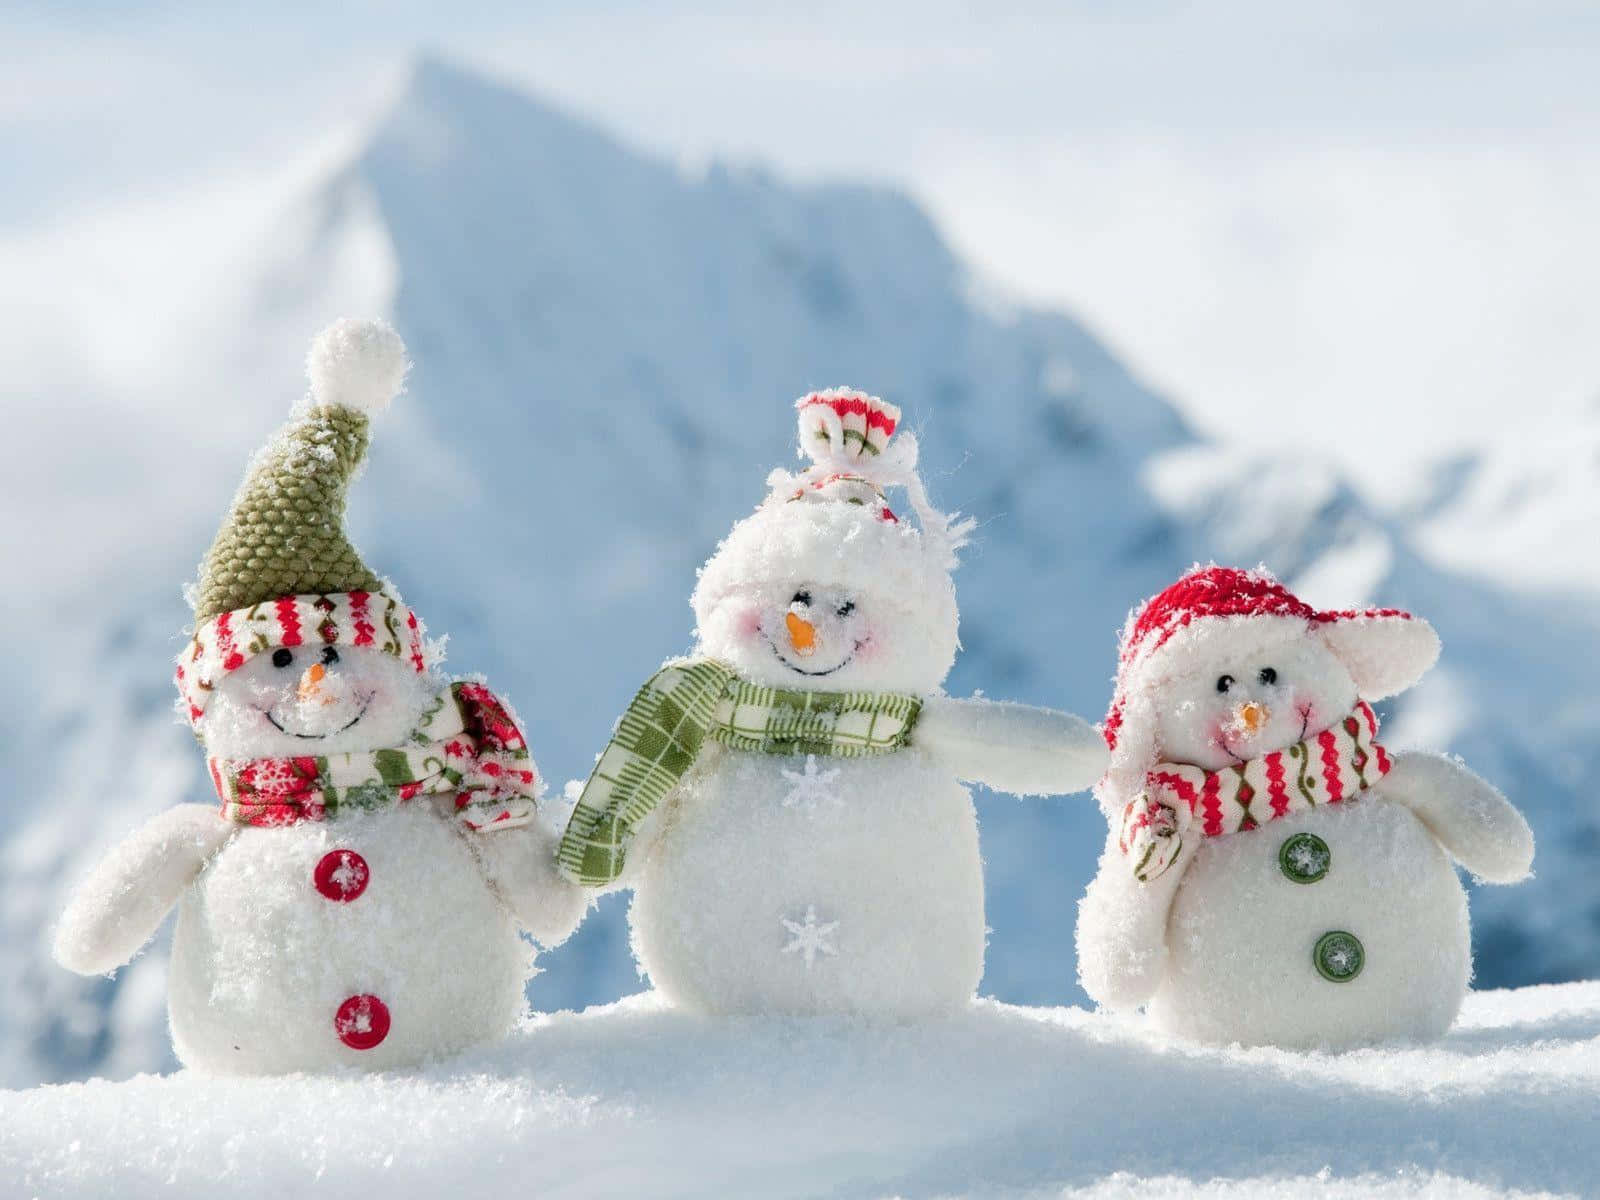 A Snowy Winter Scene with a Festive Snowman